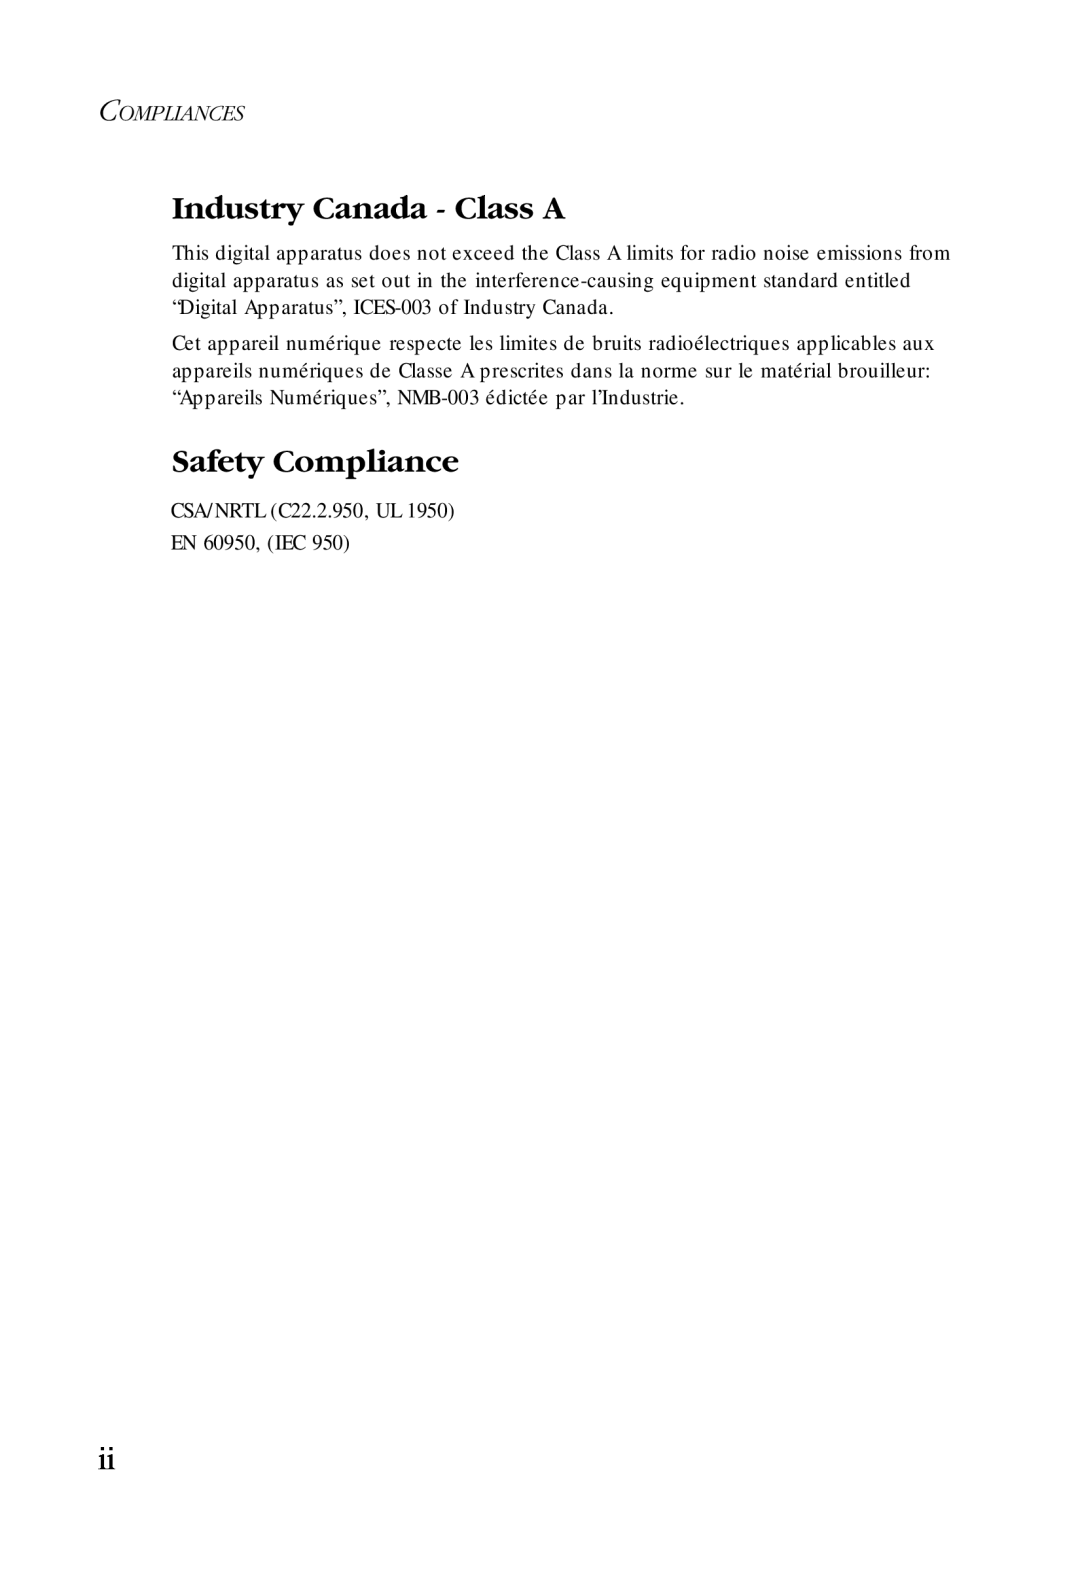 SMC Networks SMC-EZ1024DT manual Industry Canada - Class A, Safety Compliance, Compliances 